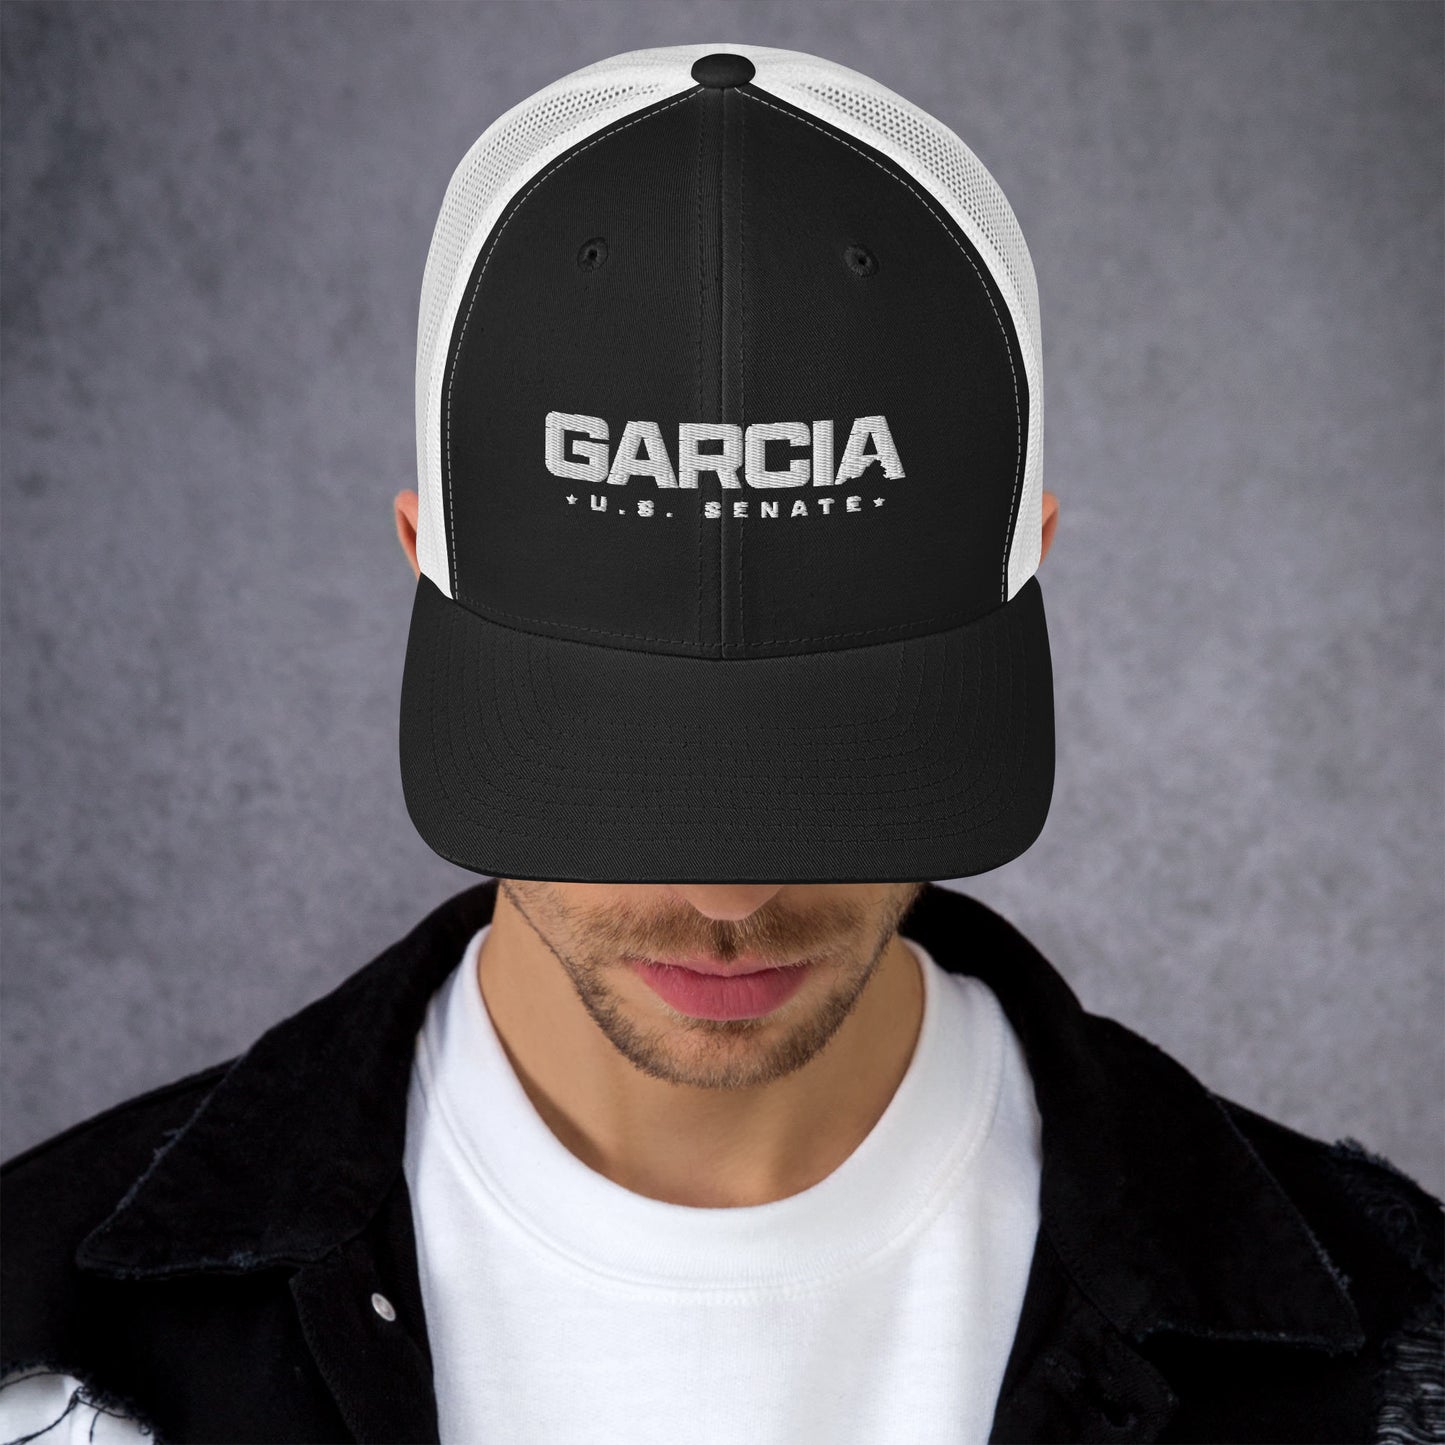 GARCIA FOR U.S.SENATE TRUCKER CAP